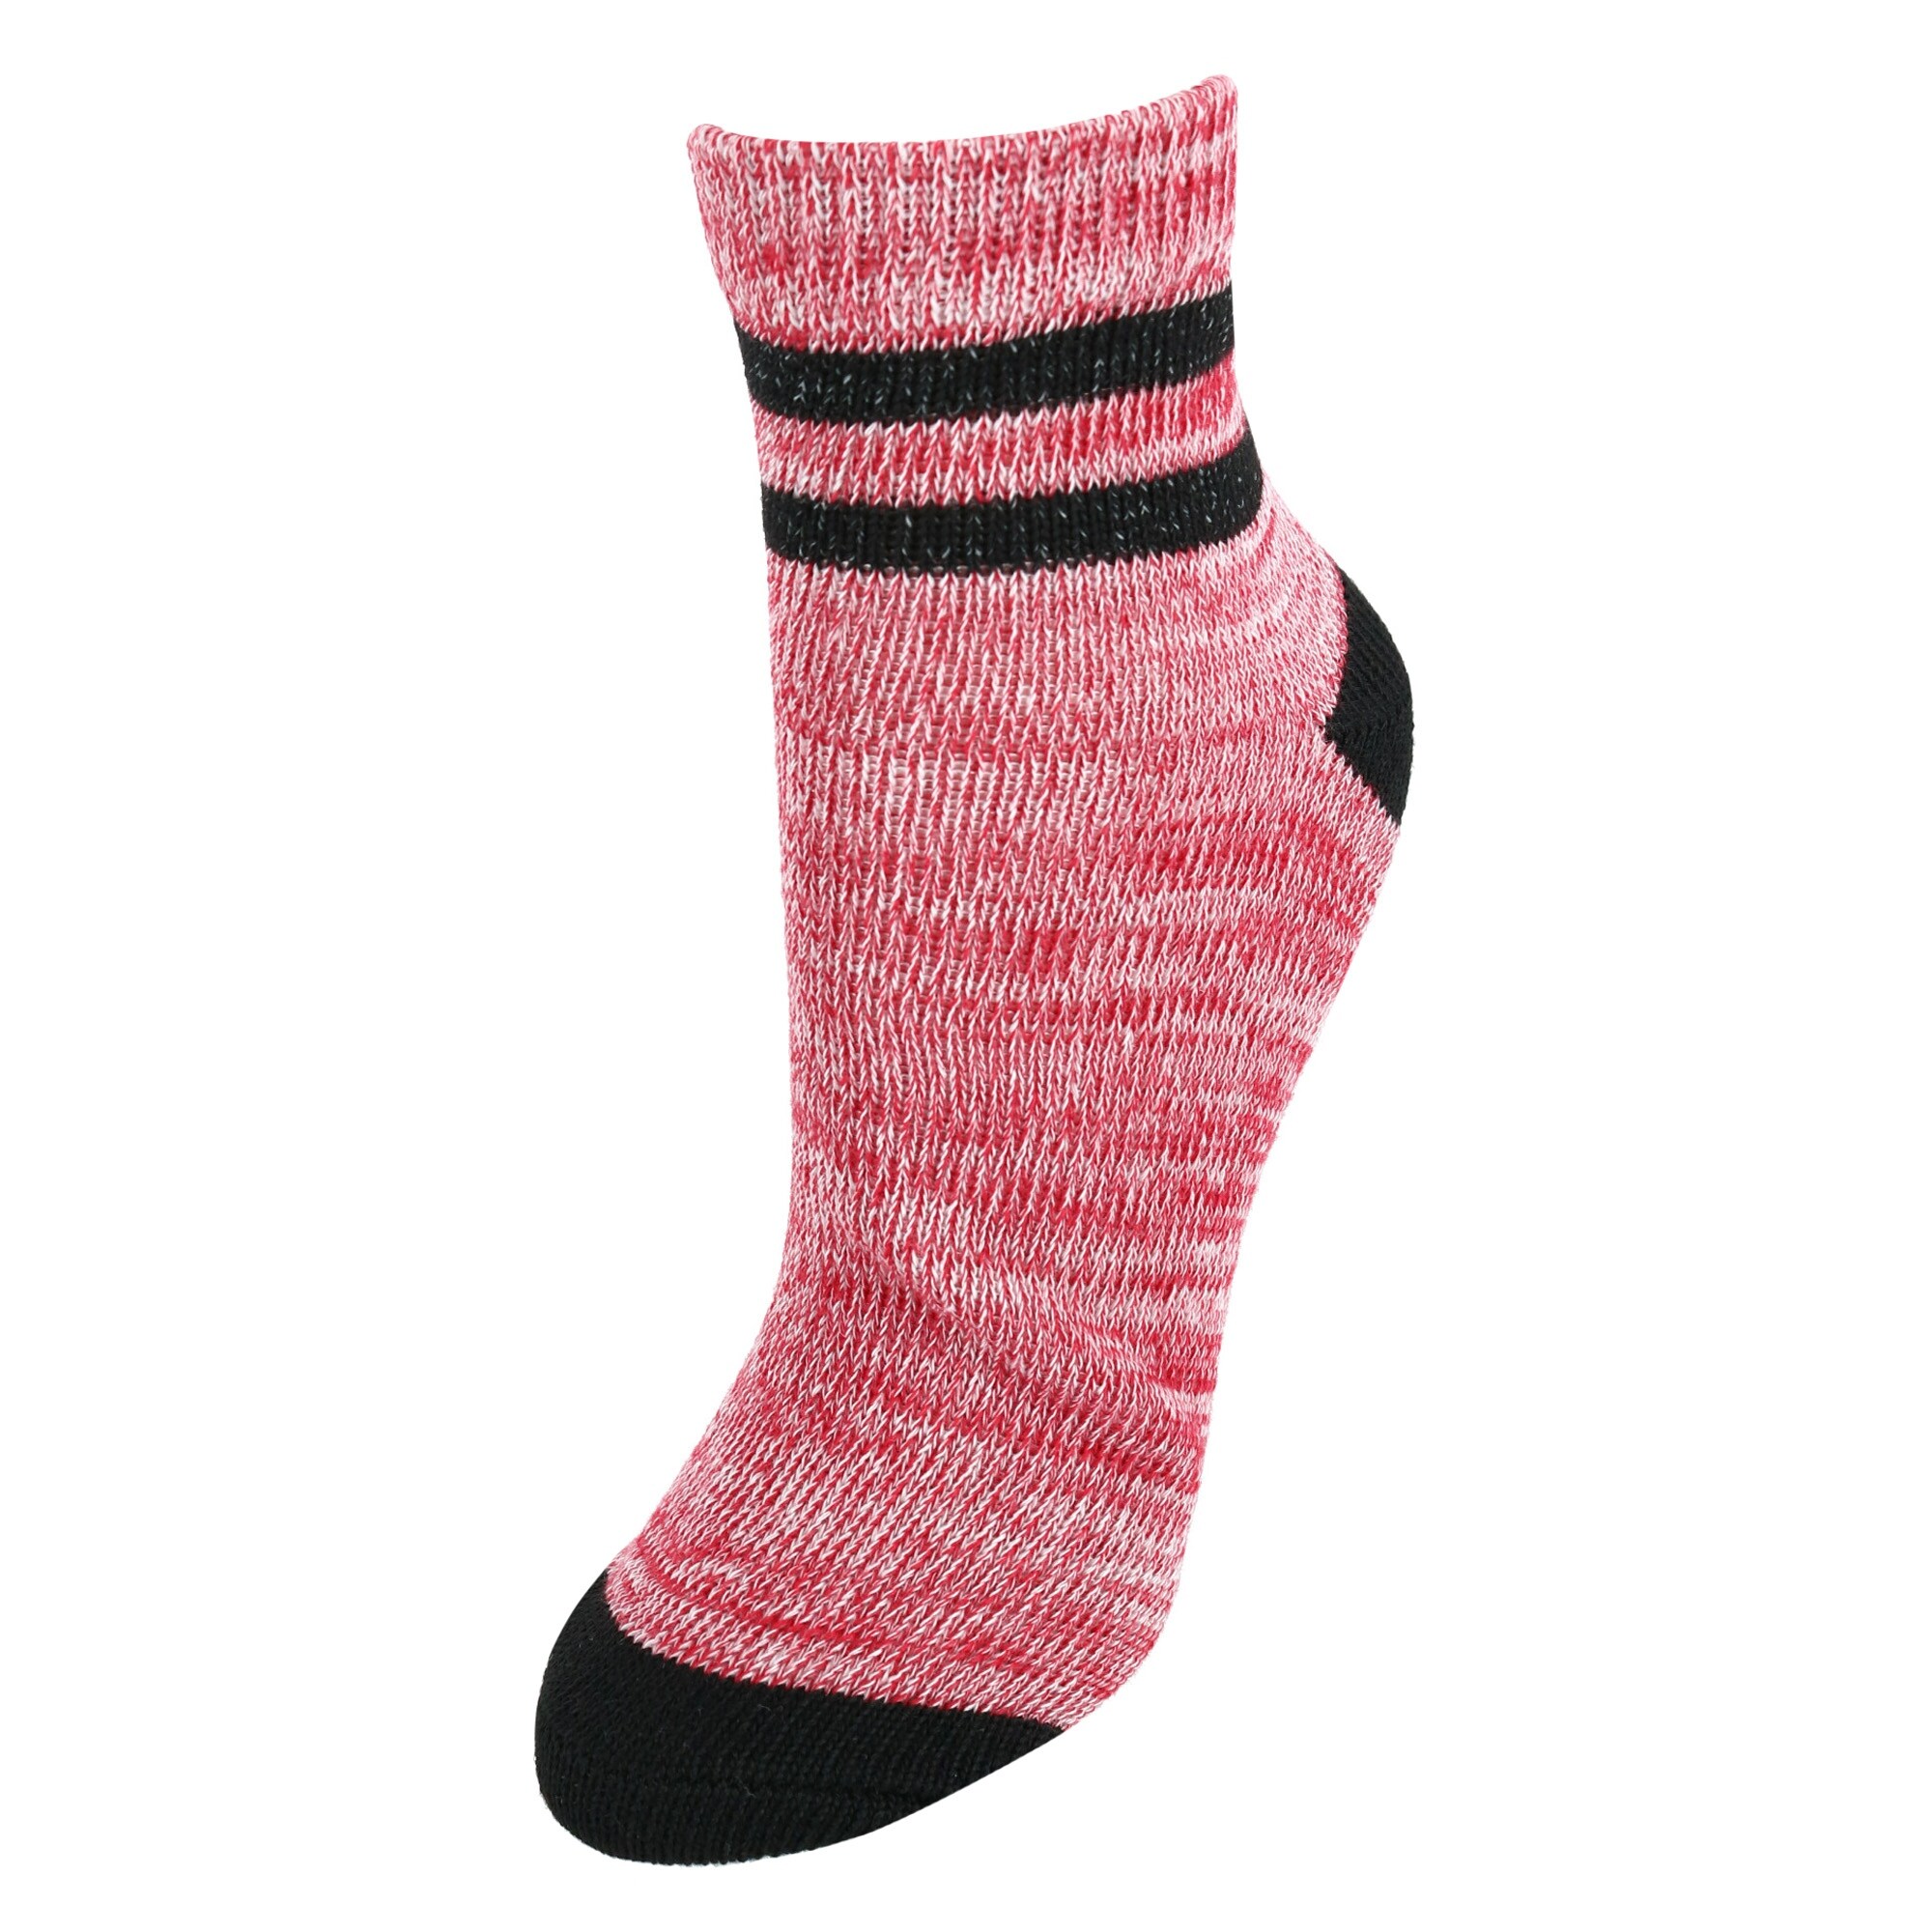 great socks for women